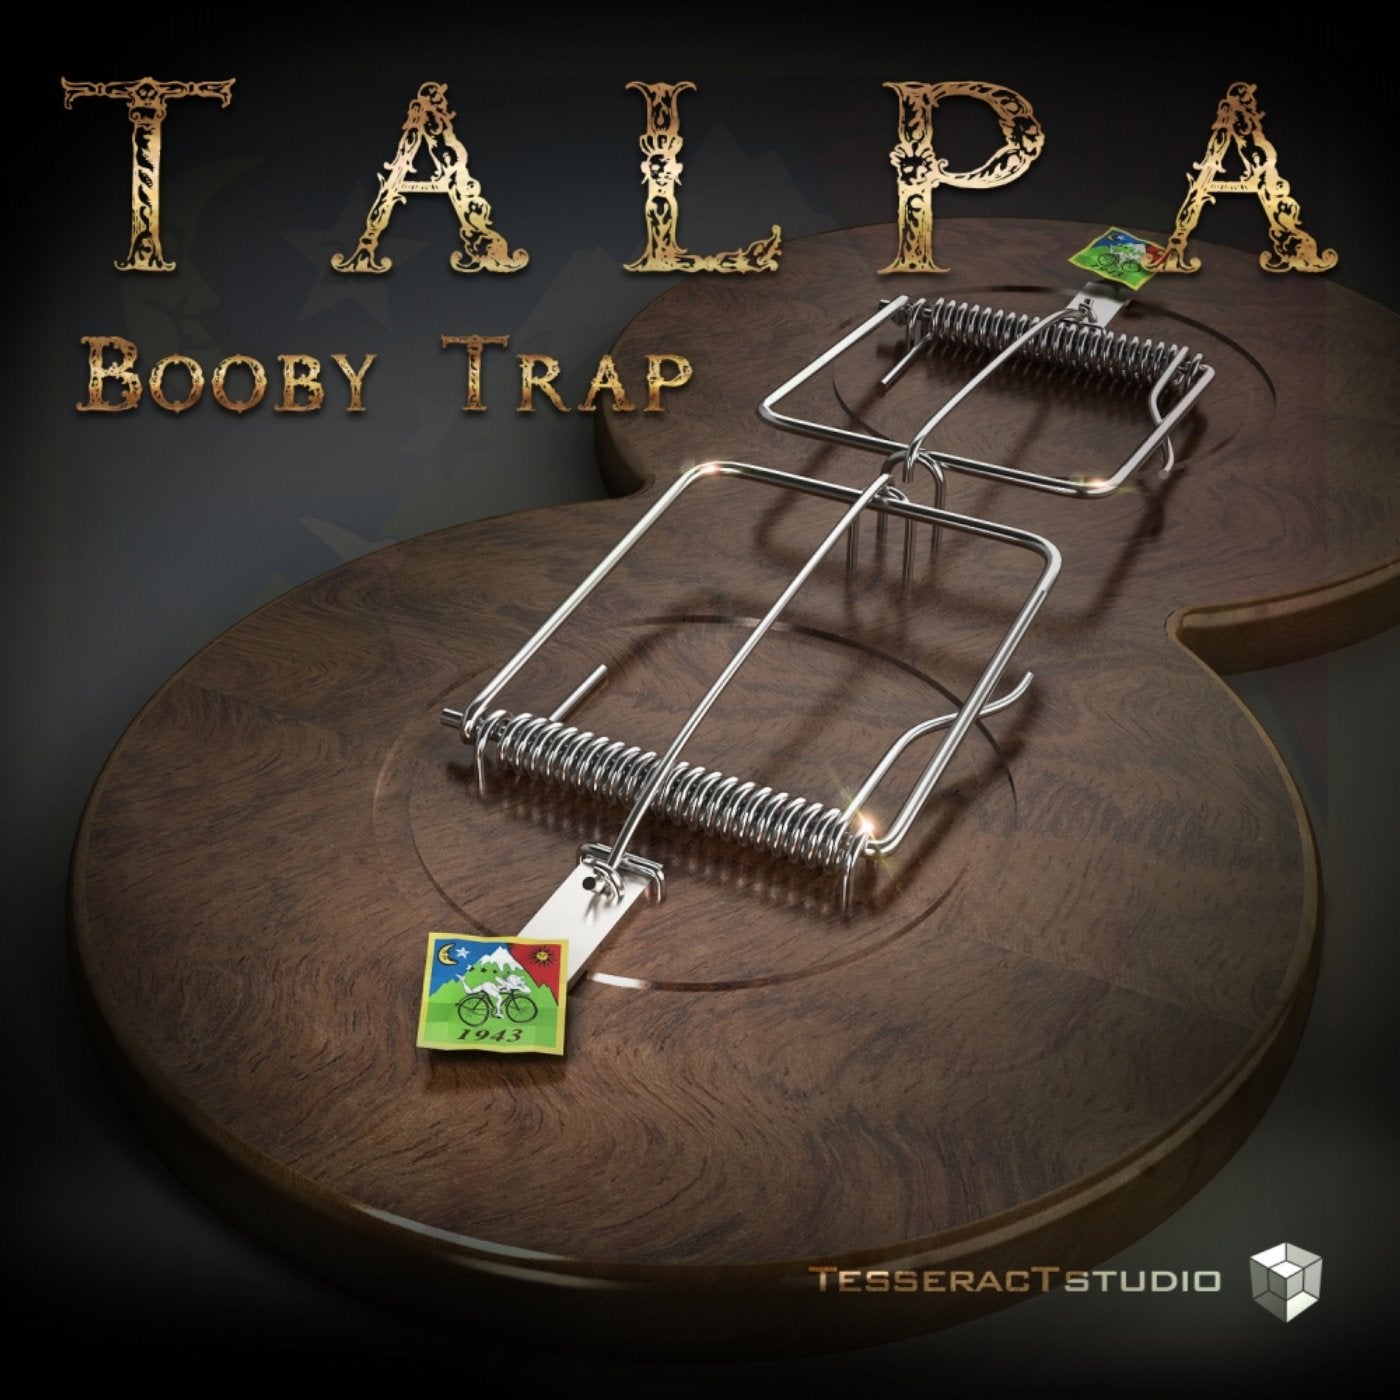 Boobie trap. Booby Trap. Bob Saget - Booby Trap. 2015 - Talpa - Booby Trap [Ep]. R6 Booby Trap.